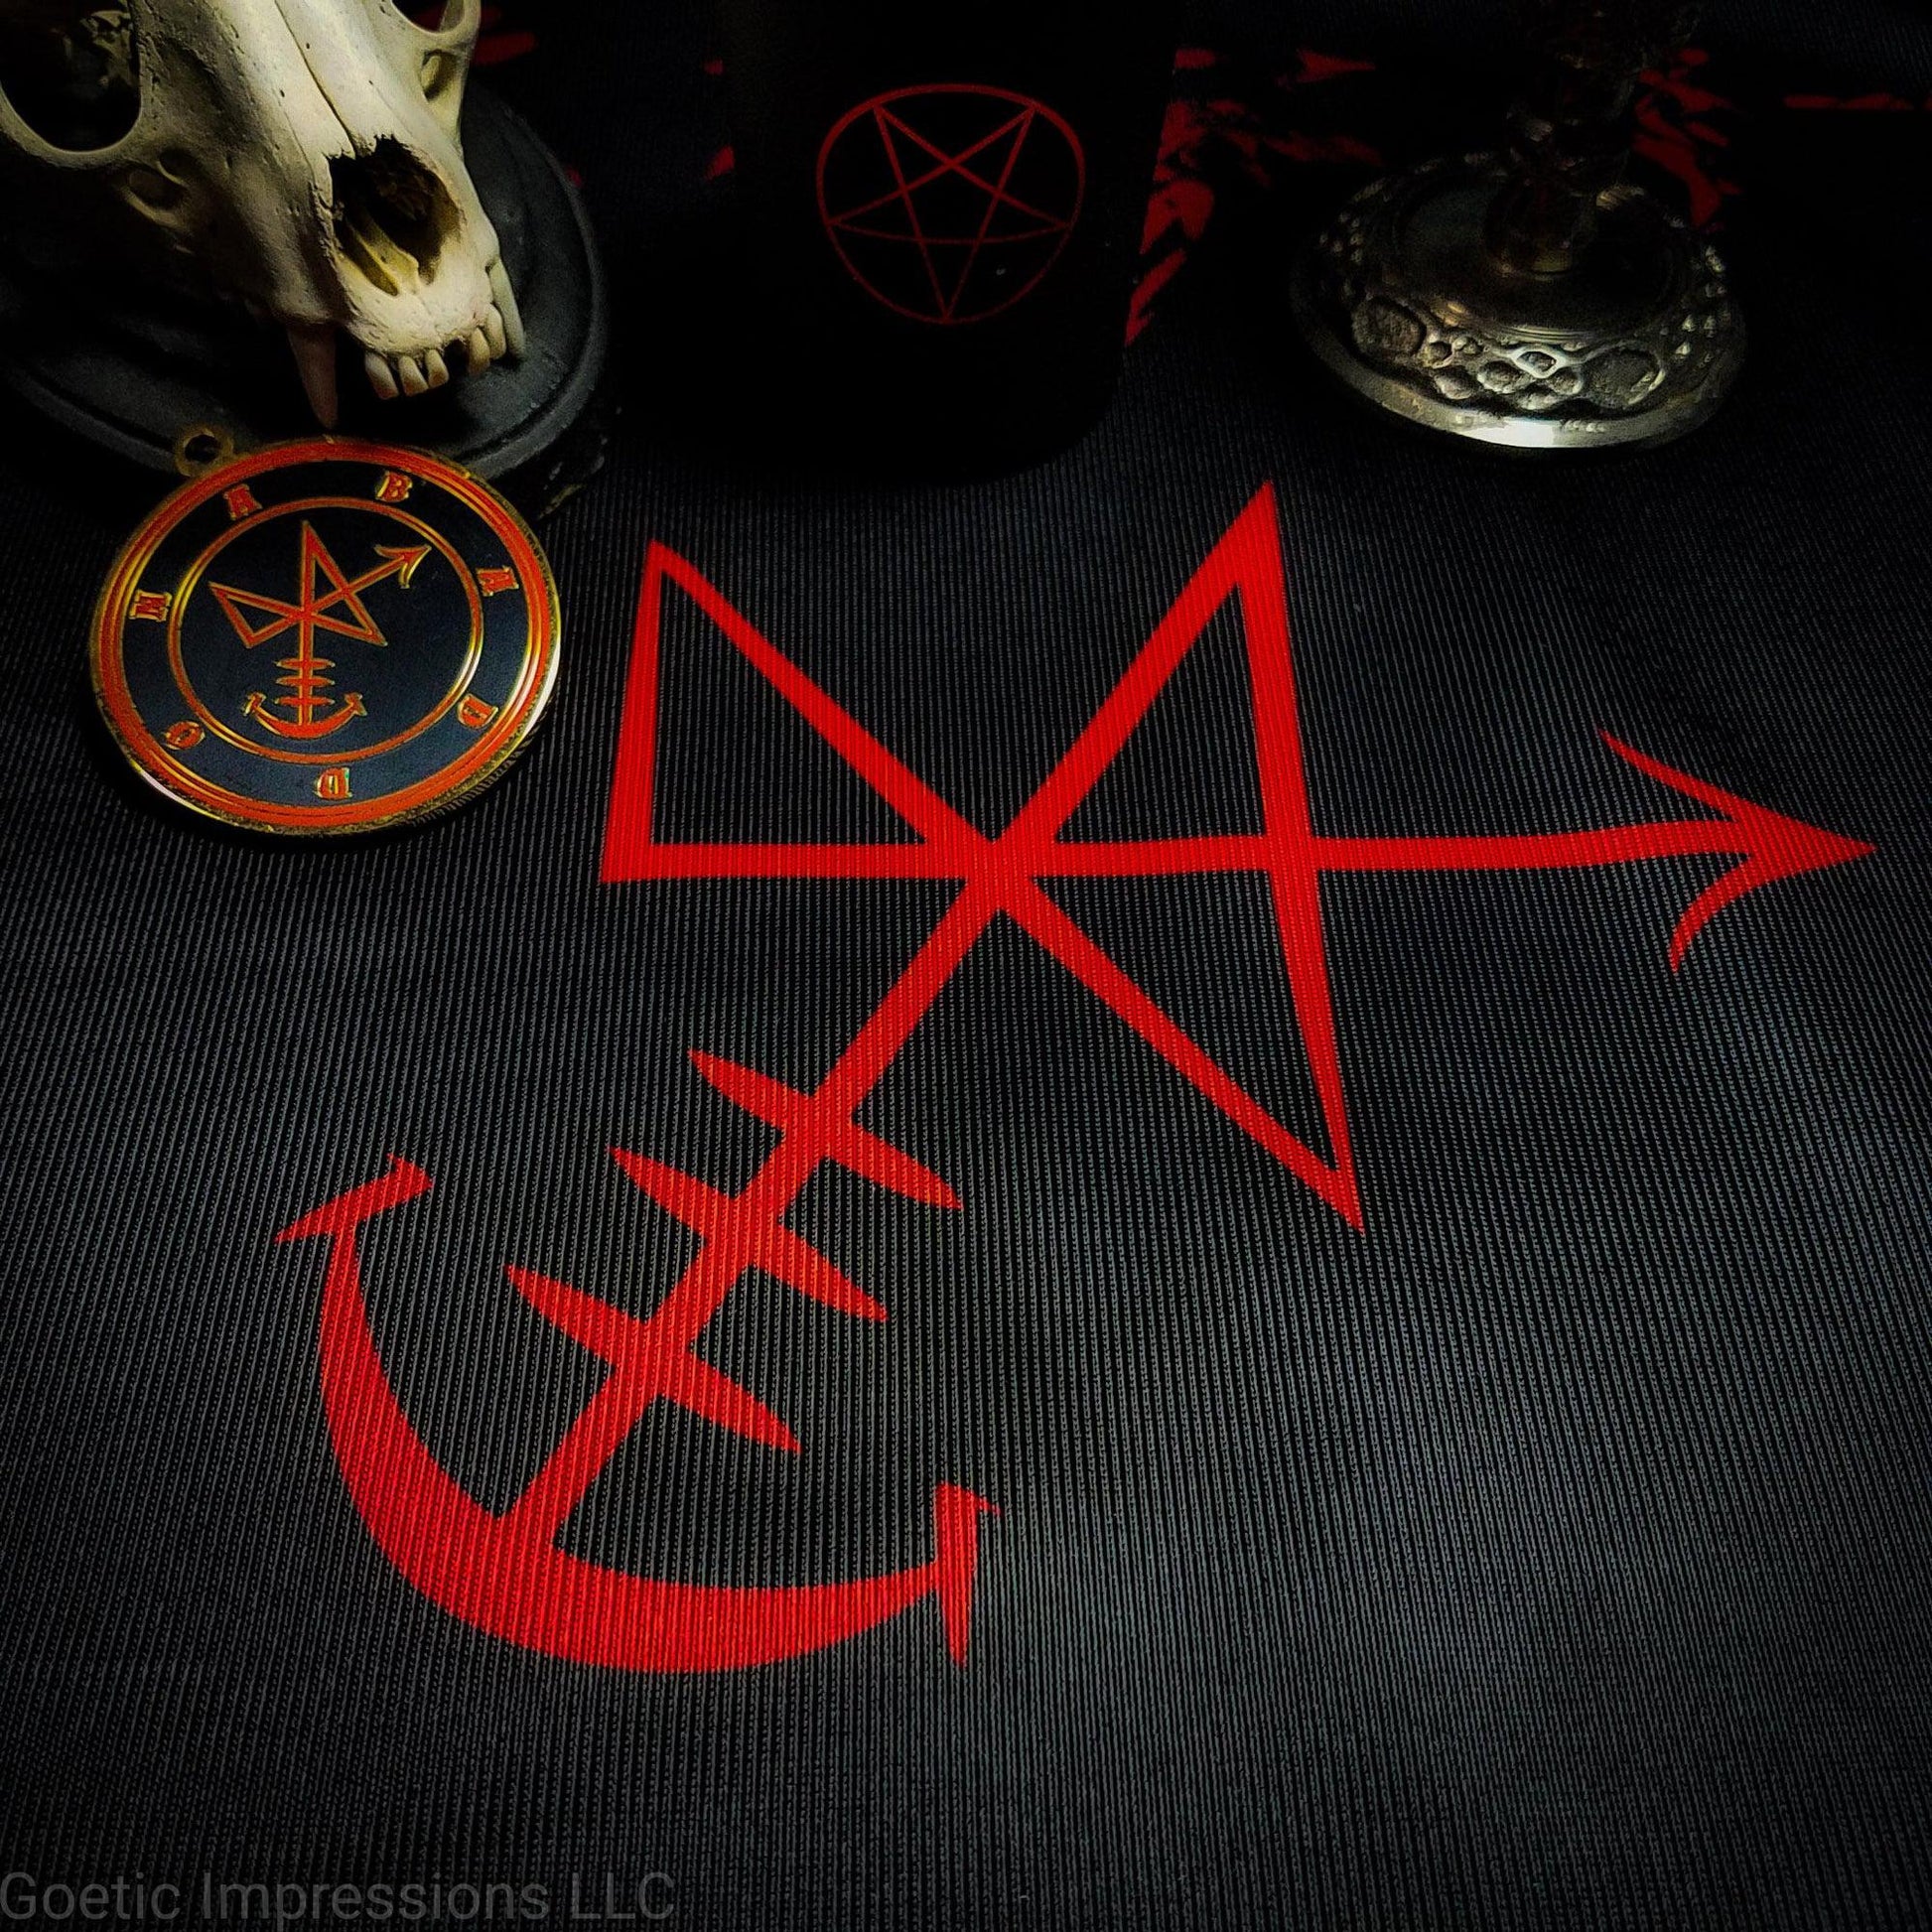 A black and red Abaddon sigil altar cloth.